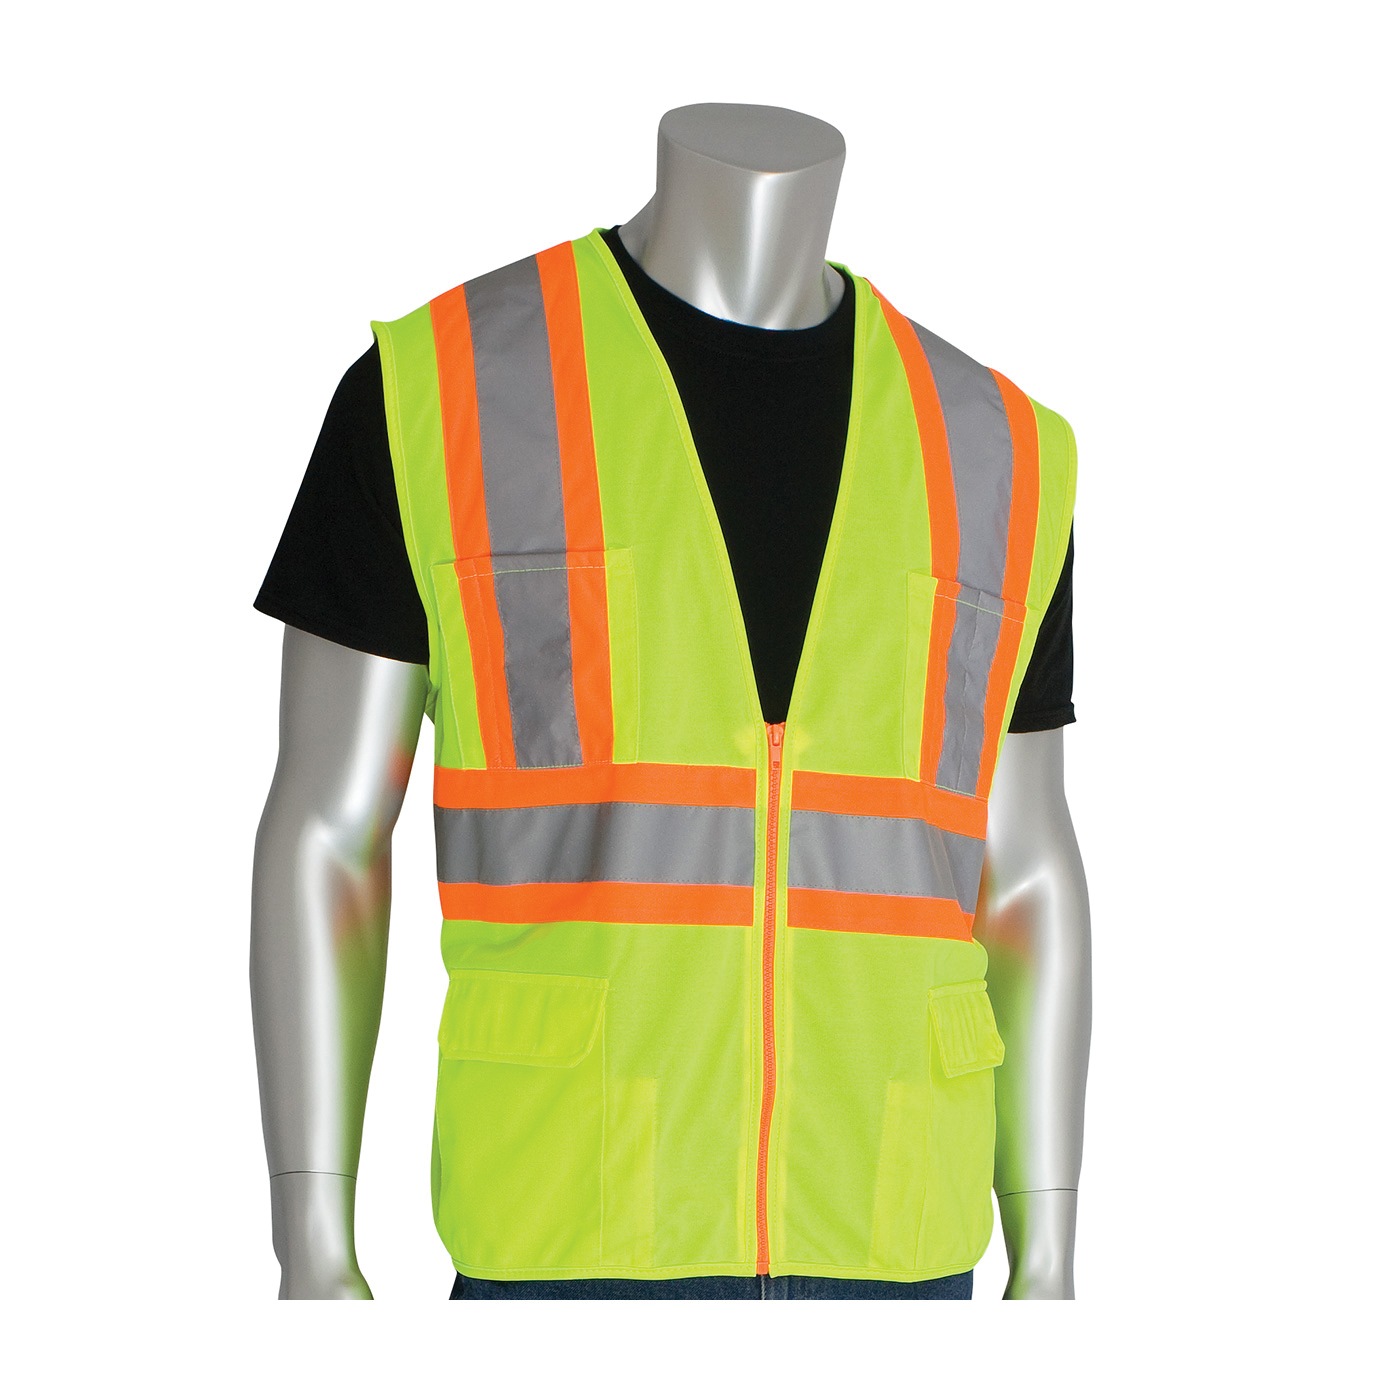 PIP® 302-MAPLY-5X 2-Tone Premium Surveyor Safety Vest, 5XL, Hi-Viz Lime Yellow, Polyester, Zipper Closure, 11 Pockets, ANSI Class: Class 2, Specifications Met: ANSI 107 Type R